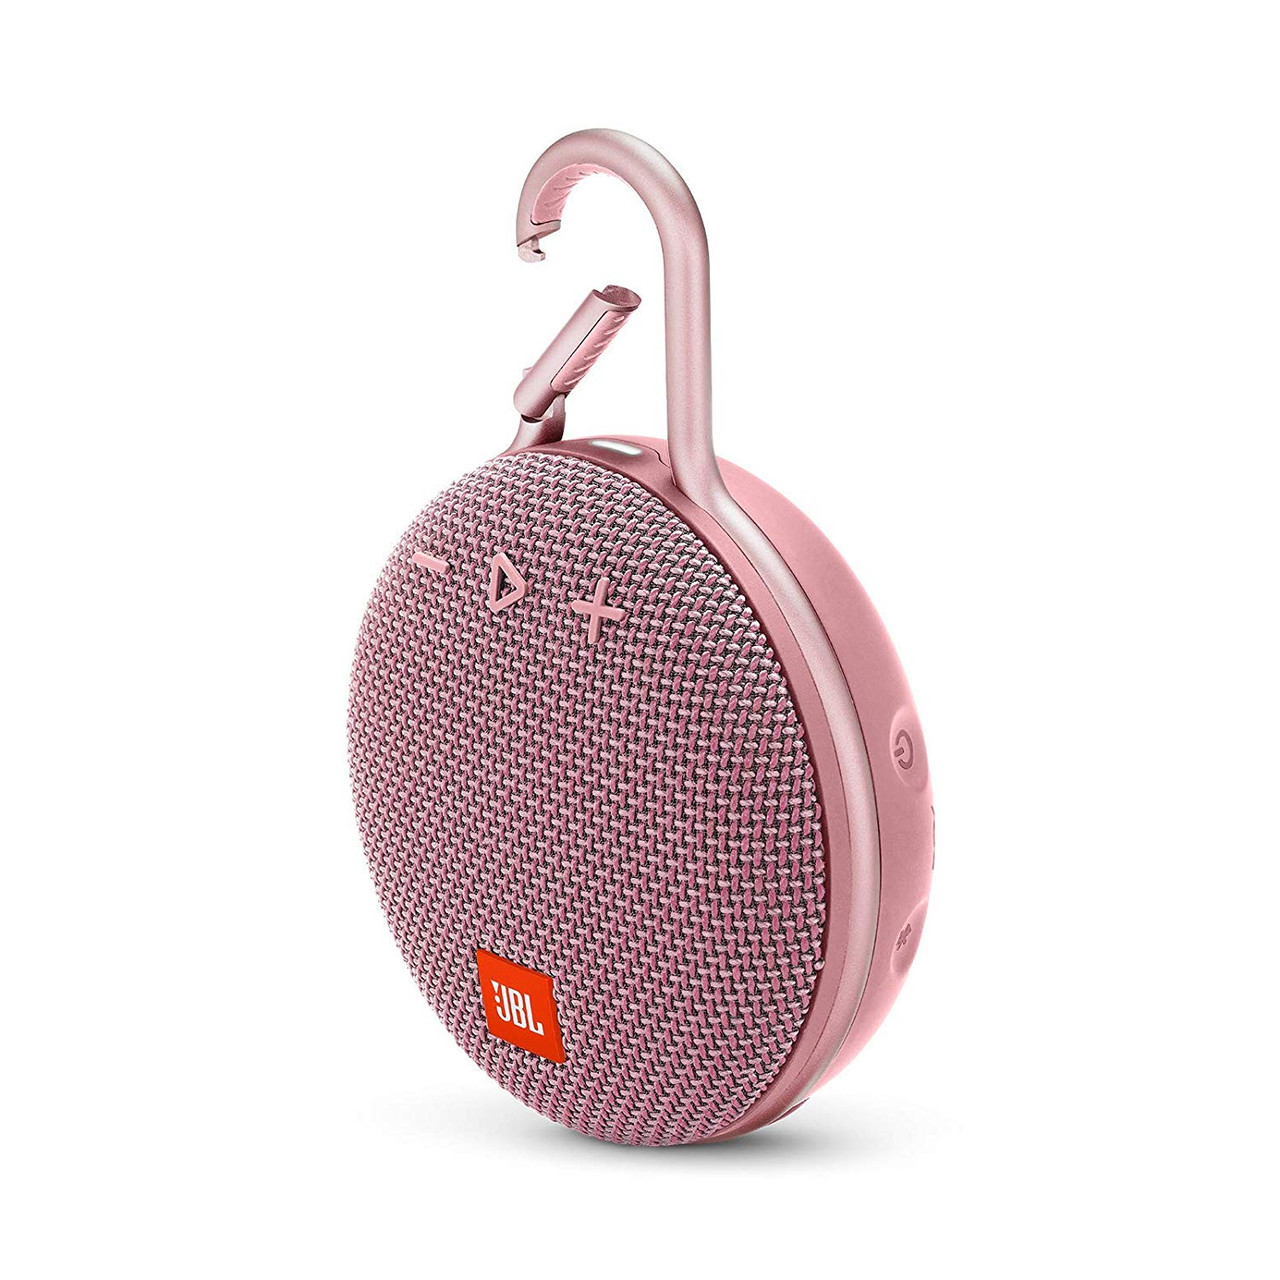 JBL Clip 3 Portable Waterproof Wireless Speaker - Pink - CLIP3-PINK - Jacob Time Inc